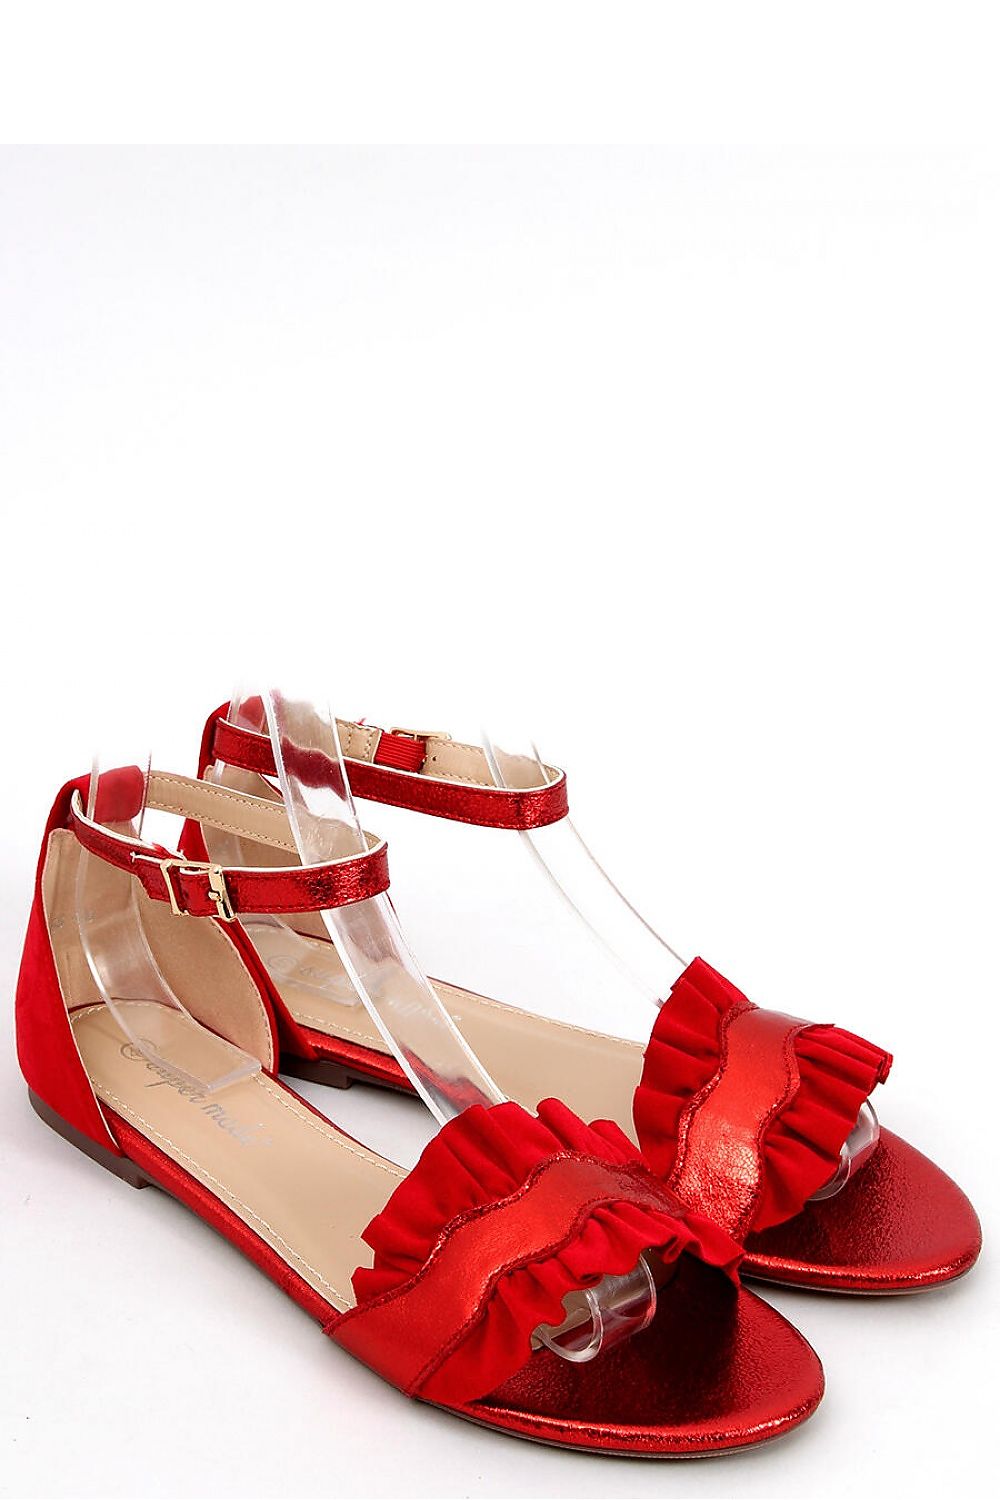 Koning Lear Begunstigde legaal sandalen model 165544 Inello Sandalen en pantoffelen groothandel  dameskleding online